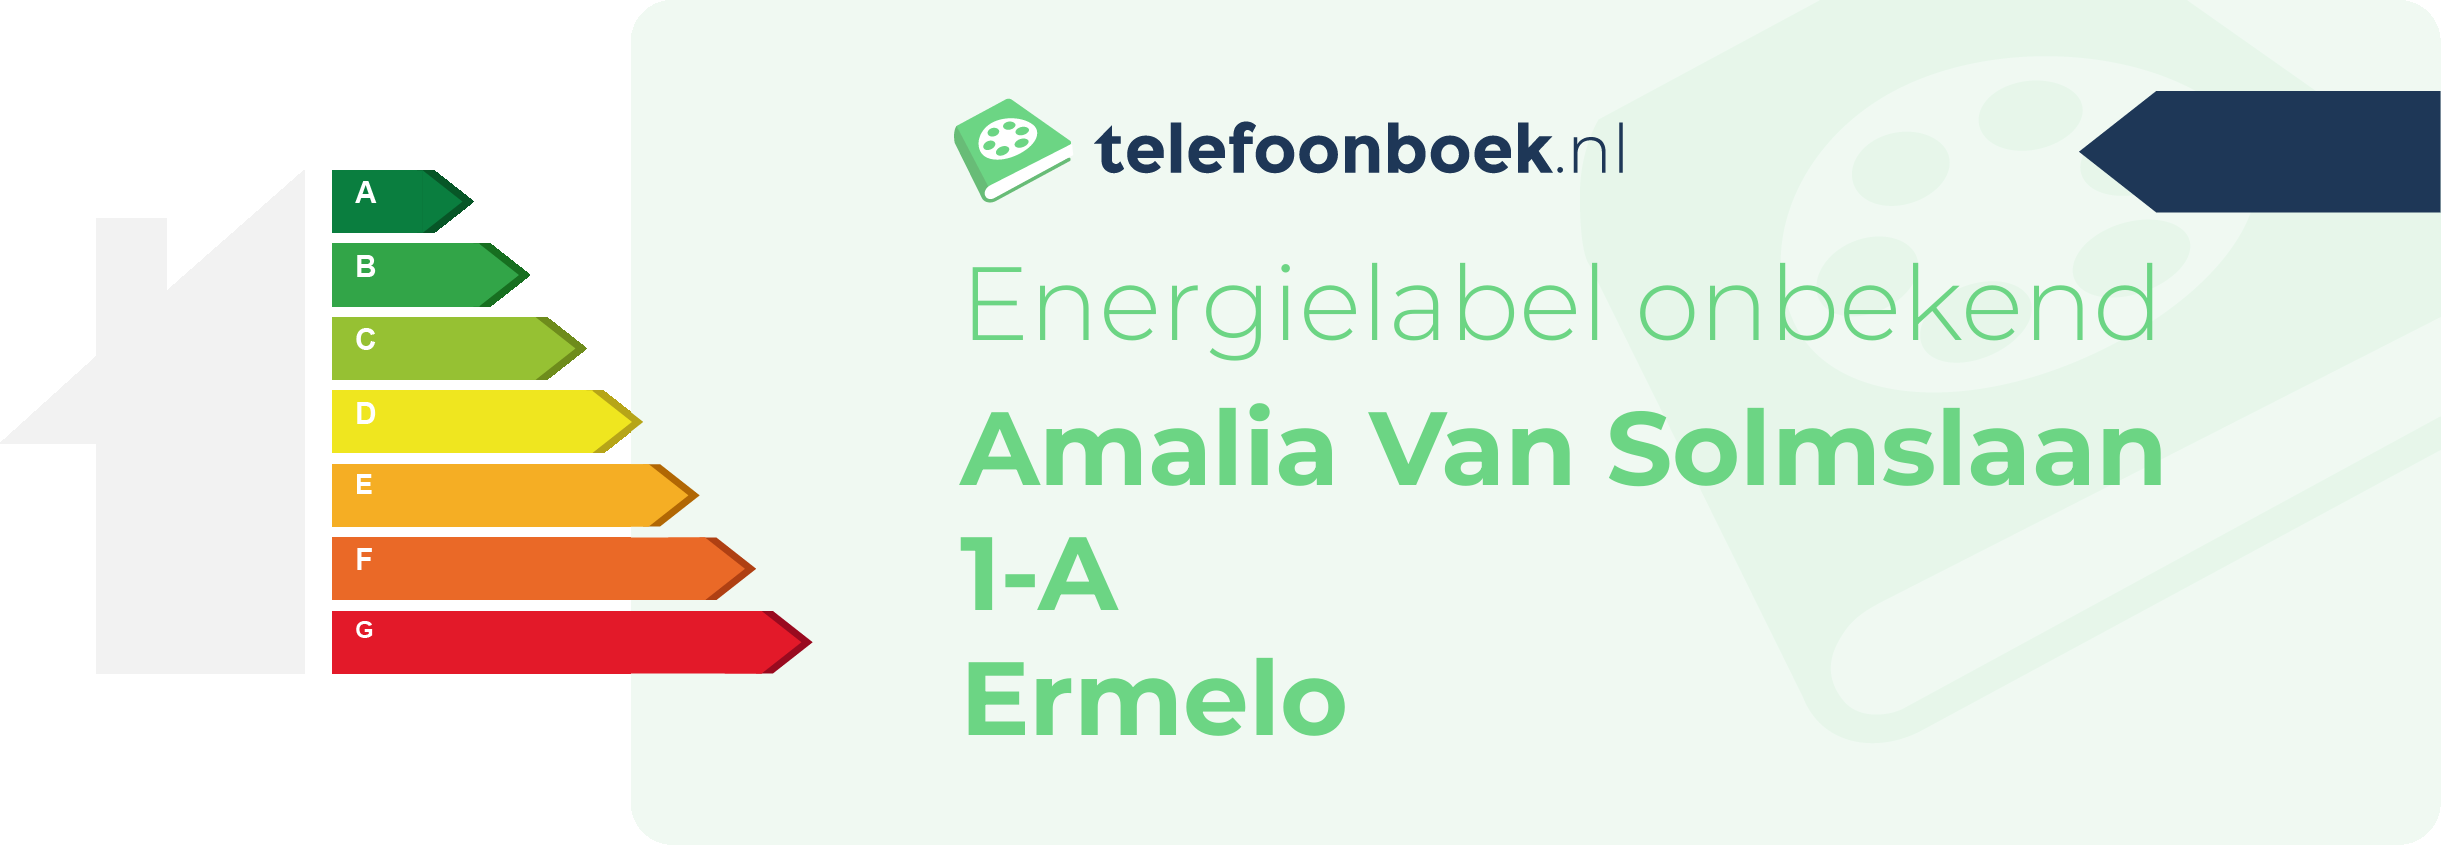 Energielabel Amalia Van Solmslaan 1-A Ermelo